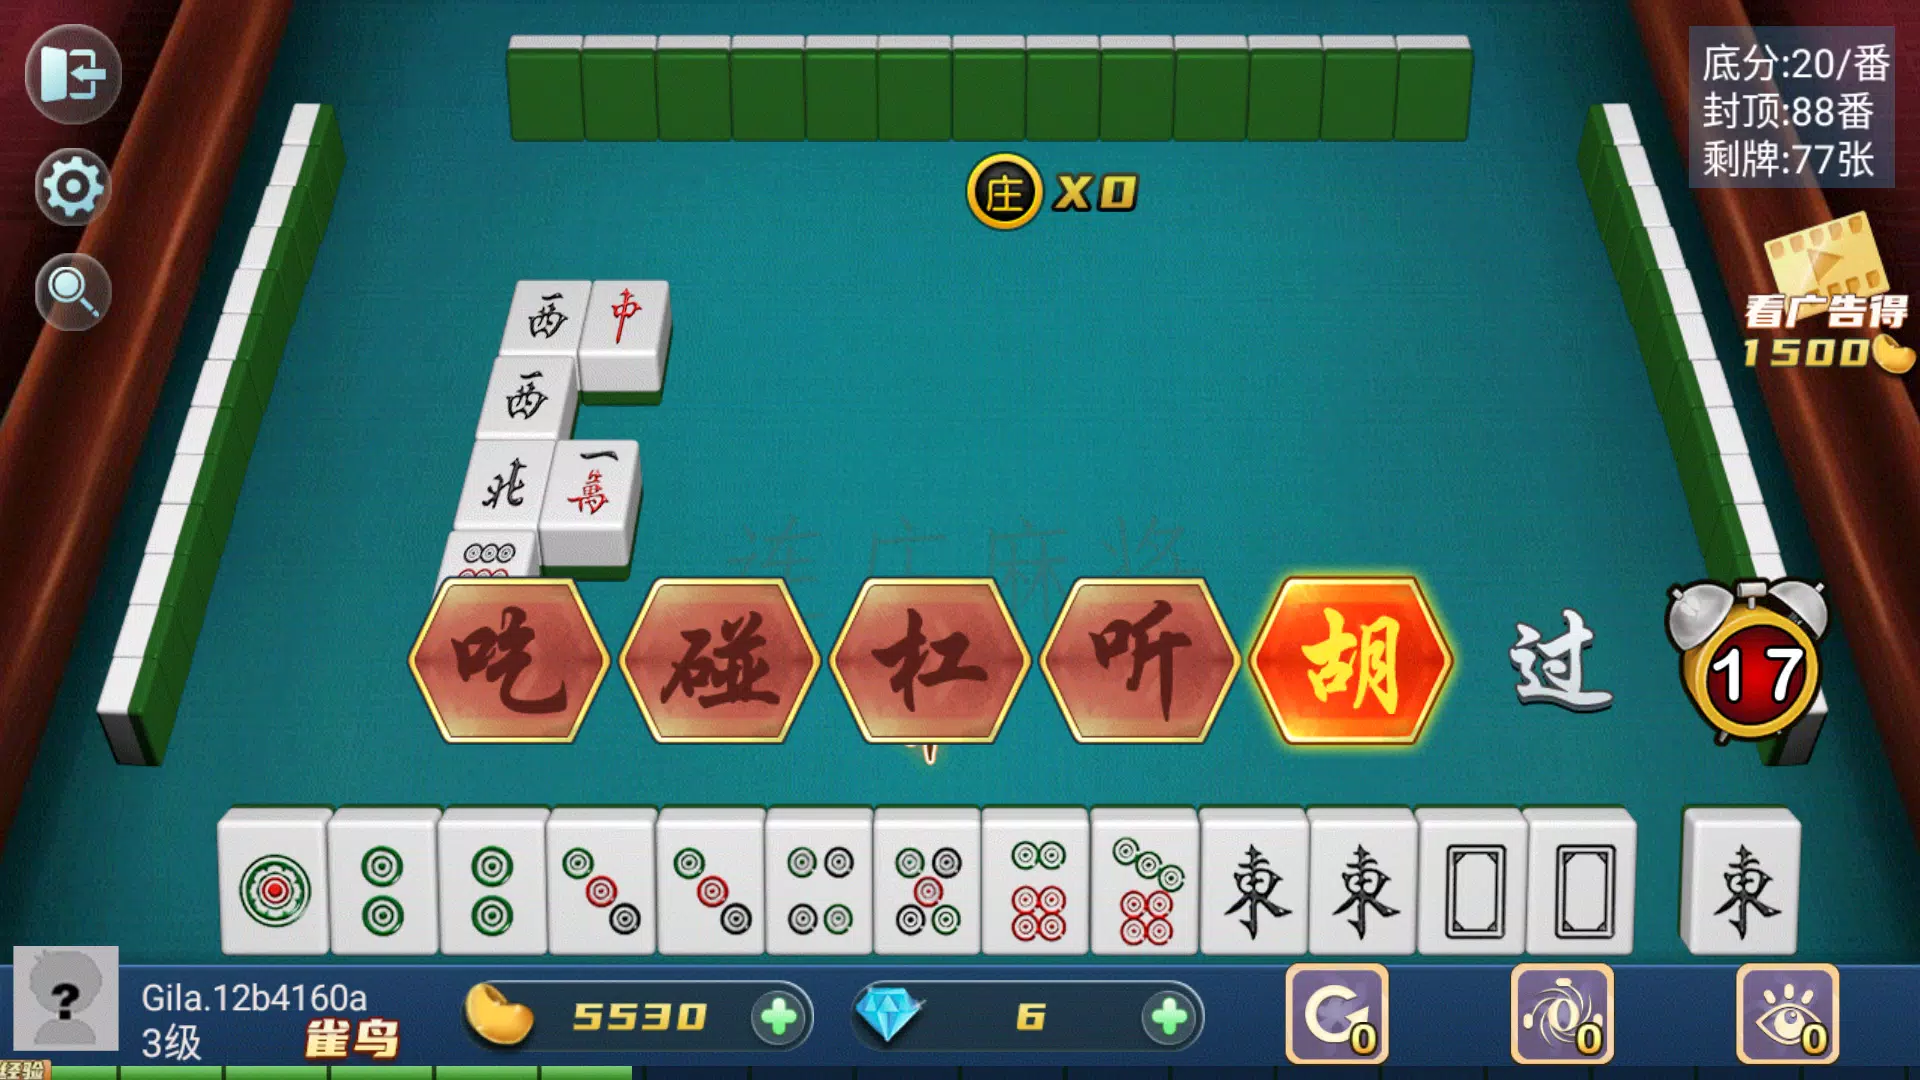 Mahjong Master APK (Android Game) - Free Download